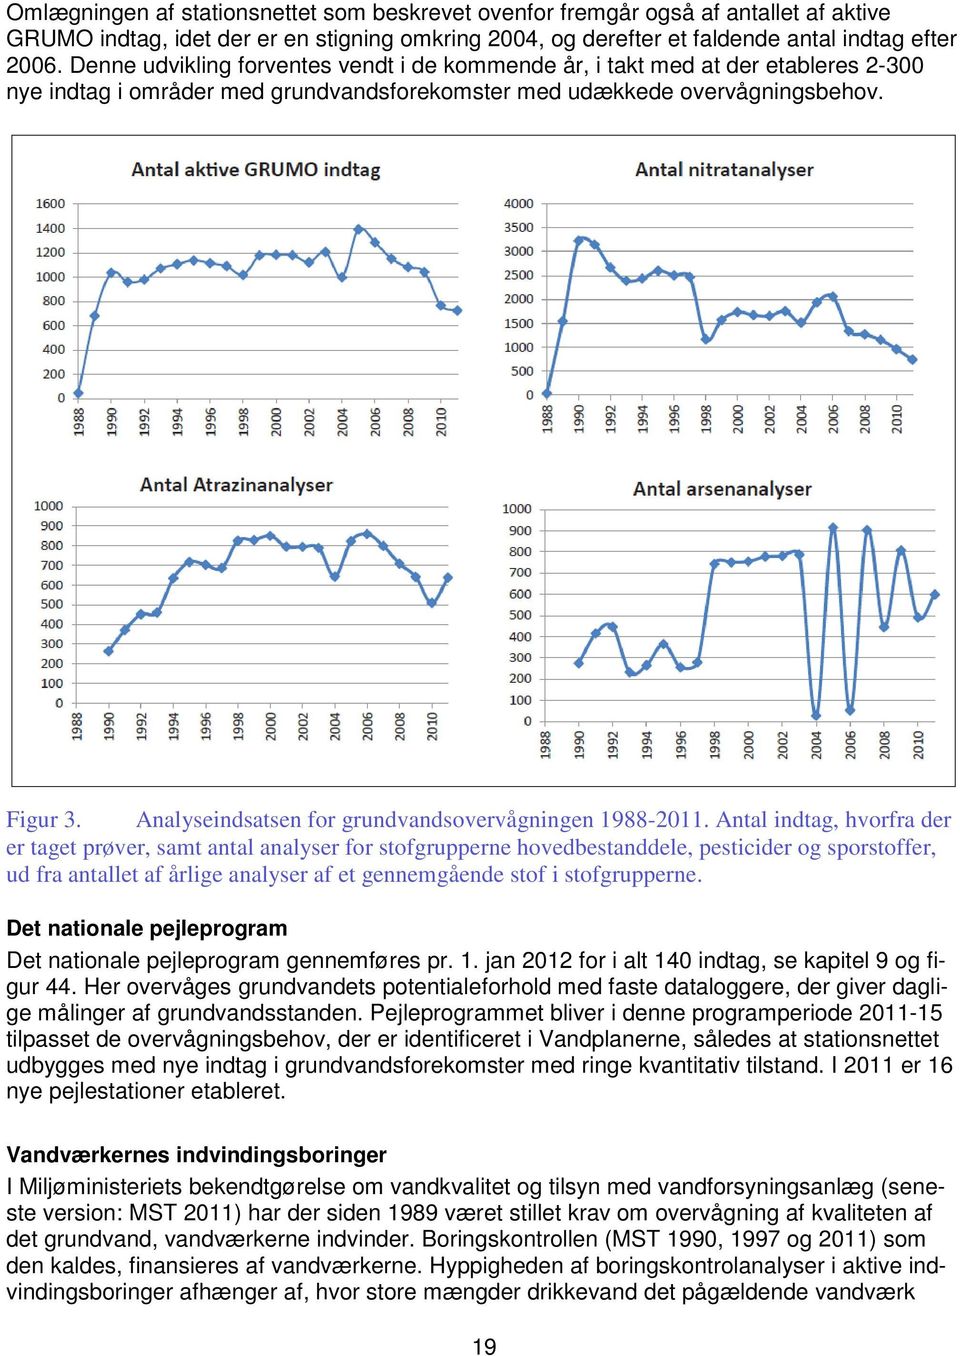 Analyseindsatsen for grundvandsovervågningen 1988-2011.